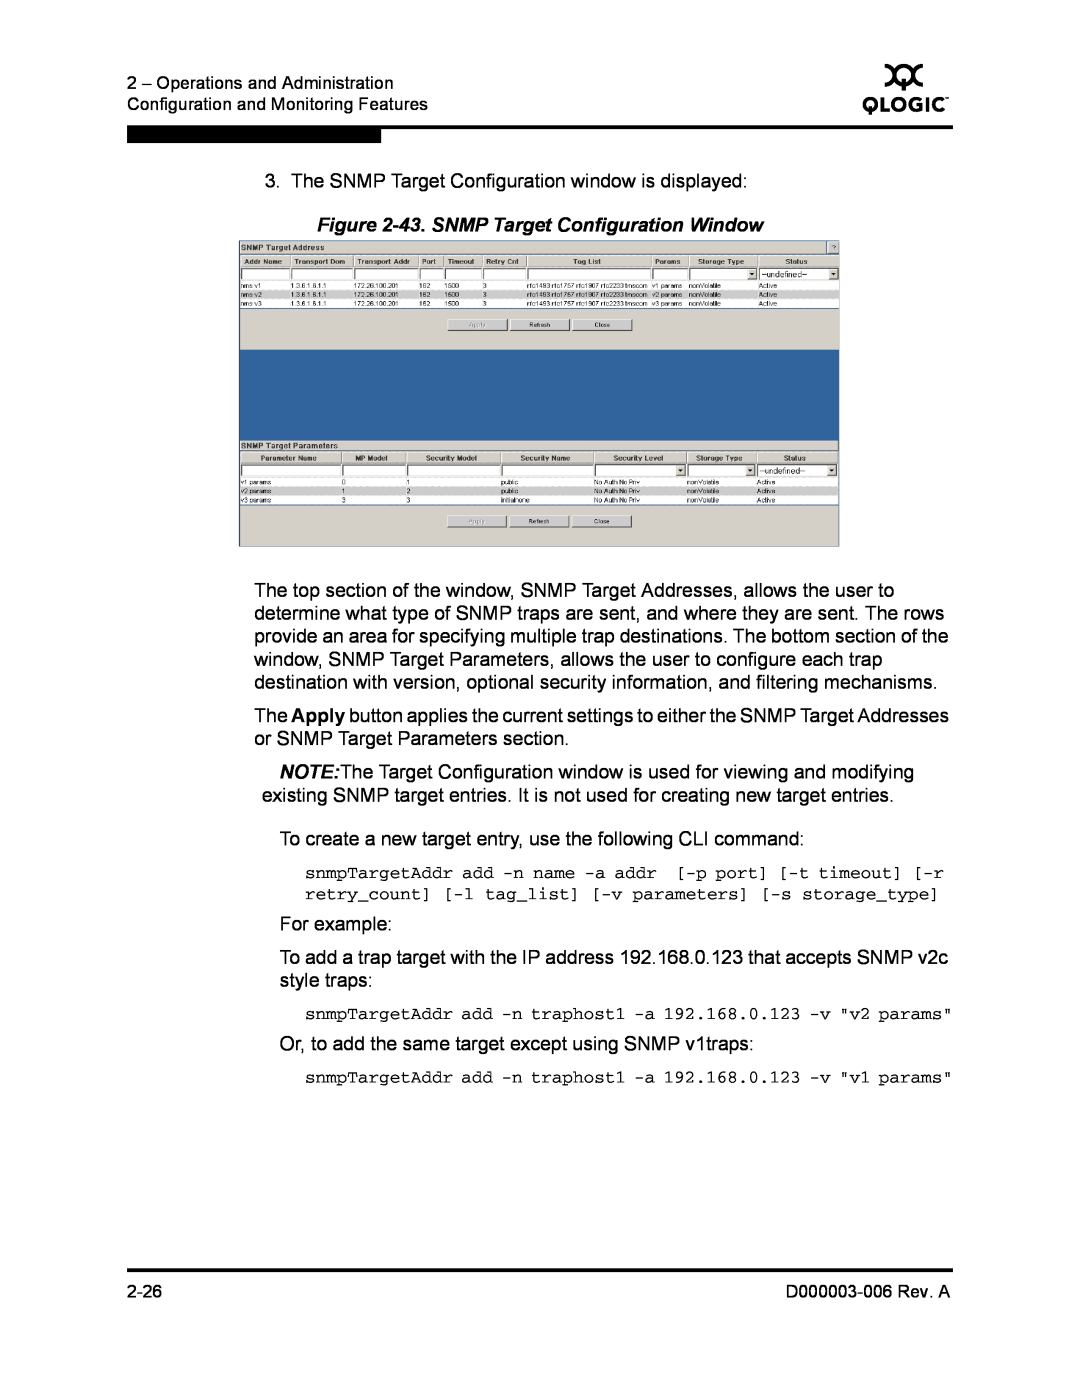 Q-Logic 9000 manual 43. SNMP Target Configuration Window 